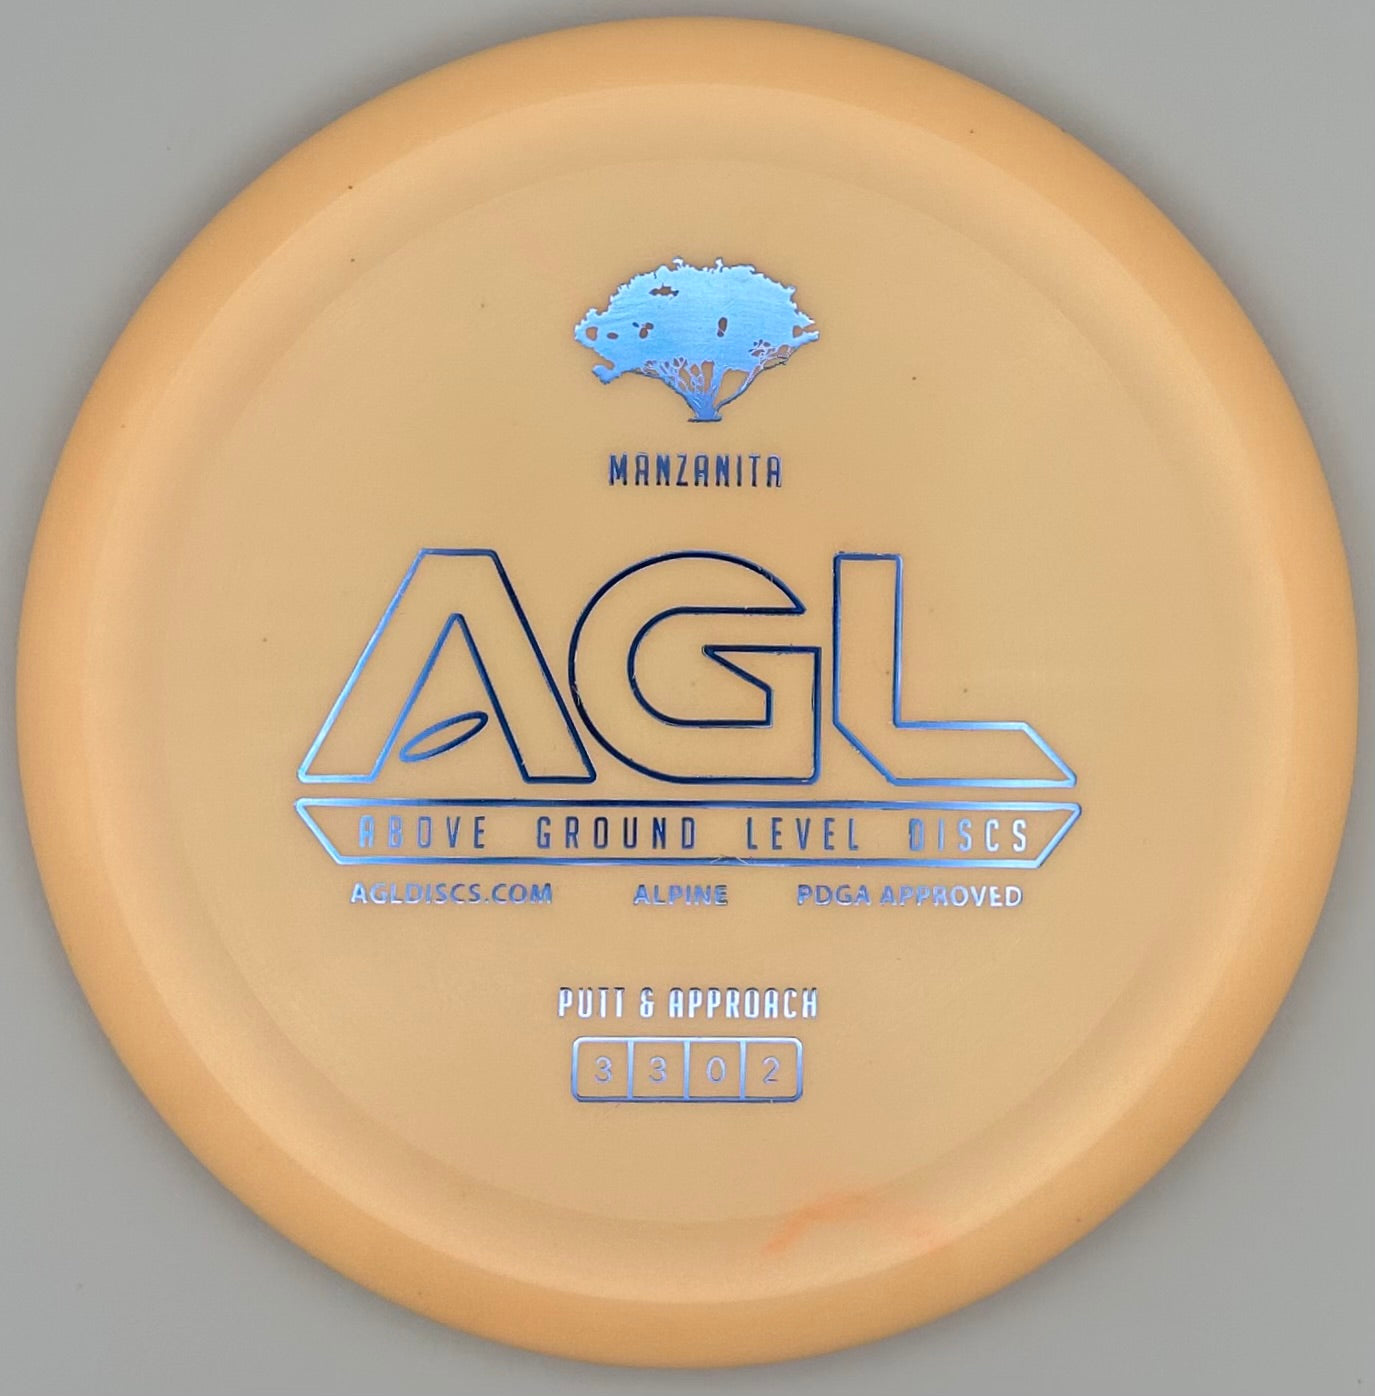 AGL Discs - Cantaloupe Alpine Manzanita (Stamped by Gateway)